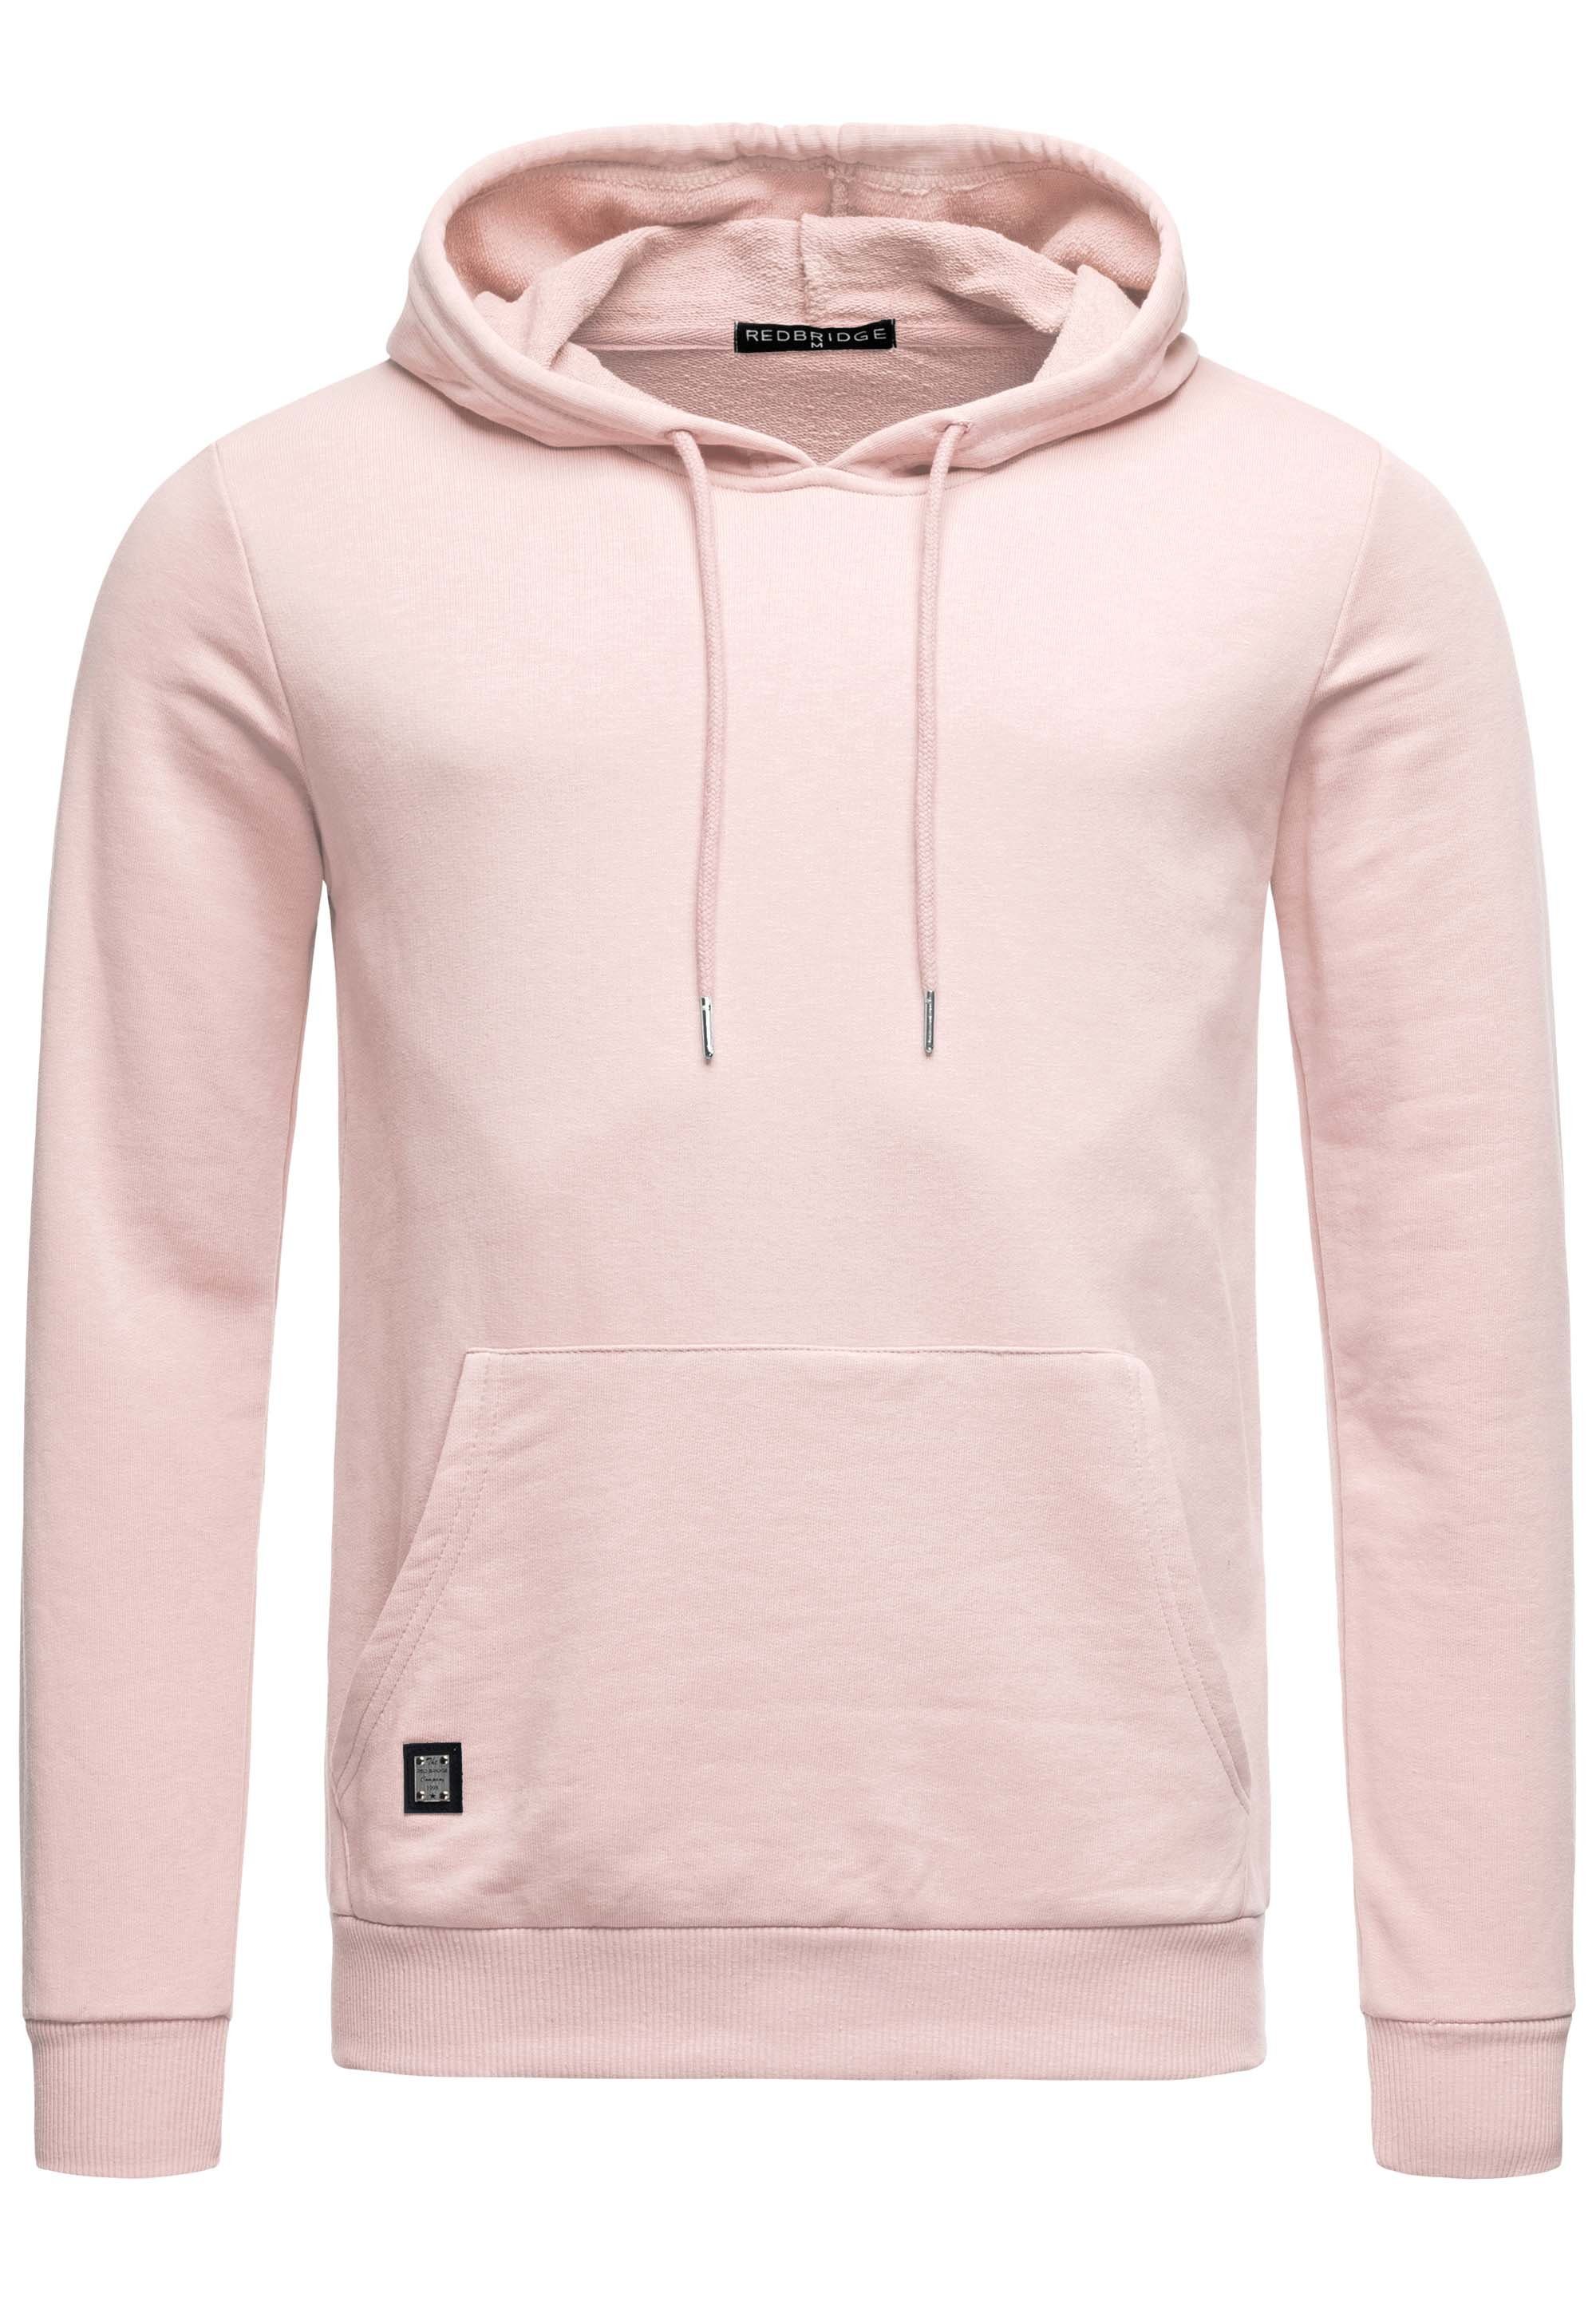 RedBridge Kapuzensweatshirt Hoodie mit Kängurutasche Premium Qualität Pink